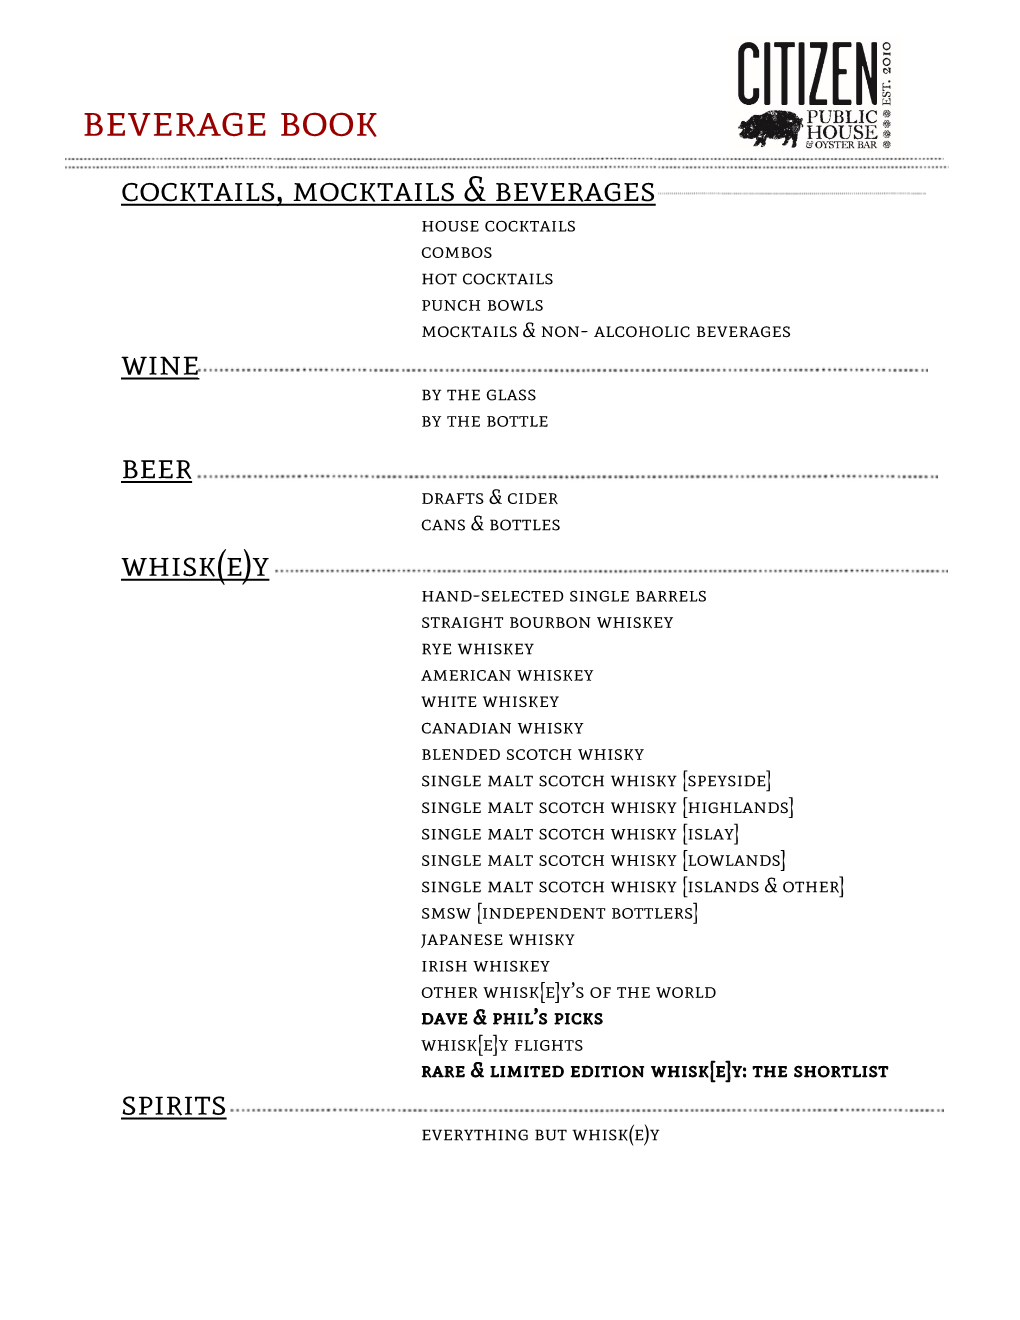 Beverage Book Cocktails, Mocktails & Beverages House Cocktails Combos Hot Cocktails Punch Bowls Mocktails & Non- Alcoholic Beverages Wine by the Glass by the Bottle